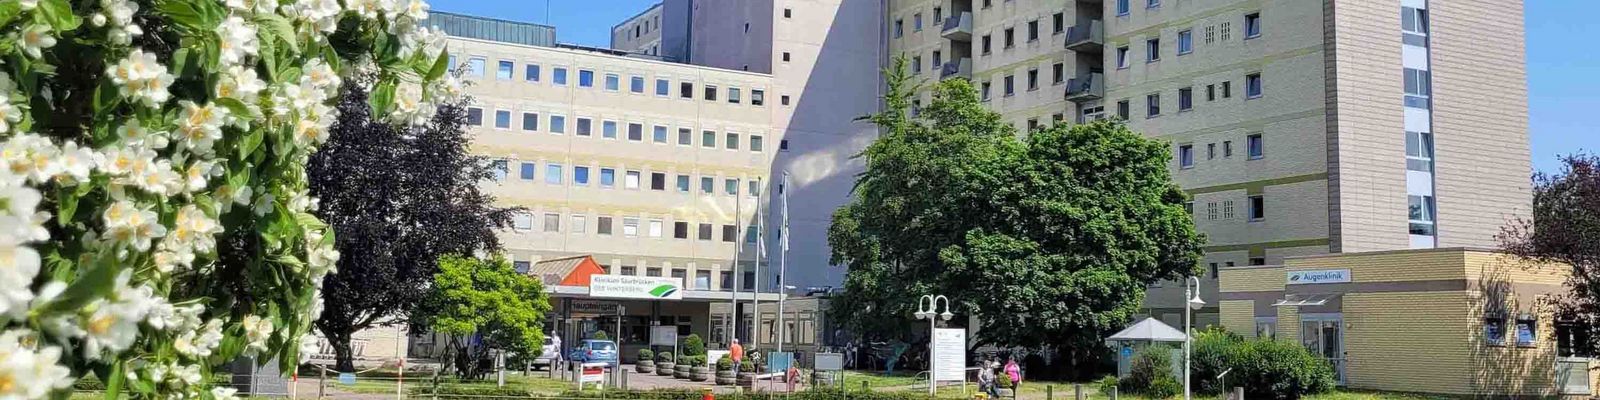 Klinikum Saarbrücken - DER WINTERBERG Gebäudeansicht Klinikum_Saarbruecken_Gebaeudeansicht_zum_Download_web.jpg